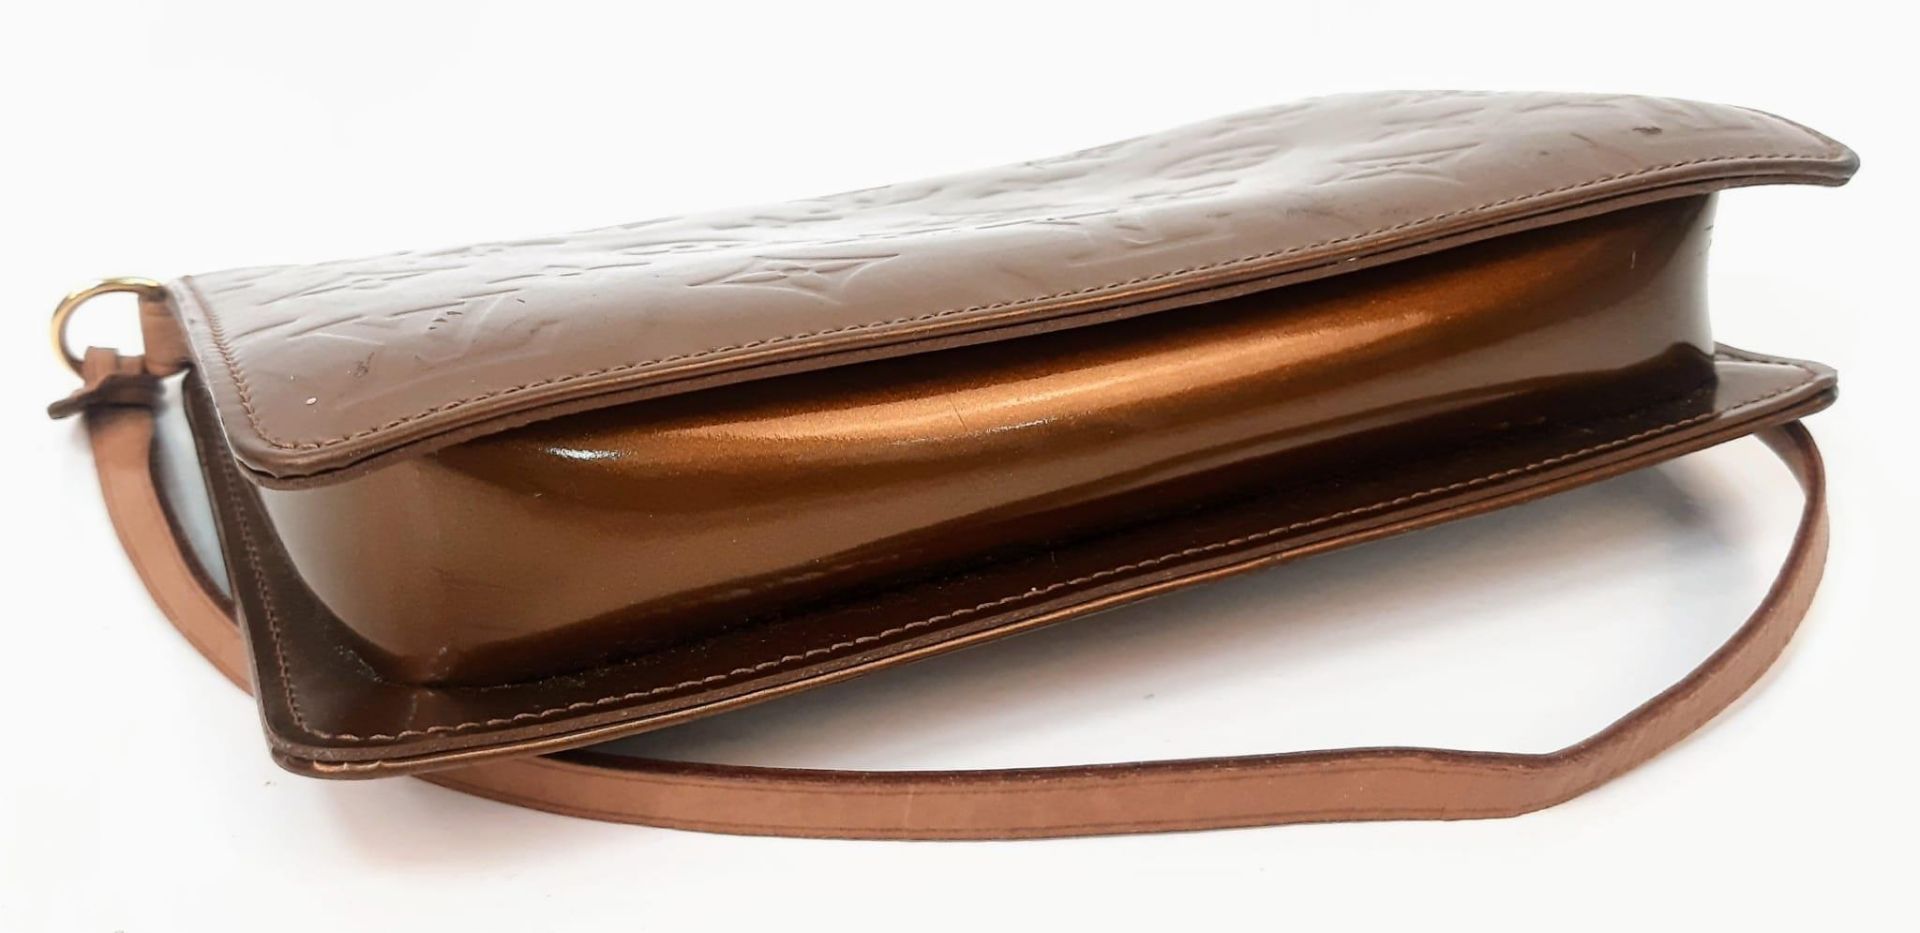 A Louis Vuitton Vernis Pochette Shoulder Bag in Copper, Emboss LV Detailing, Dark Tan Leather Strap. - Image 6 of 7